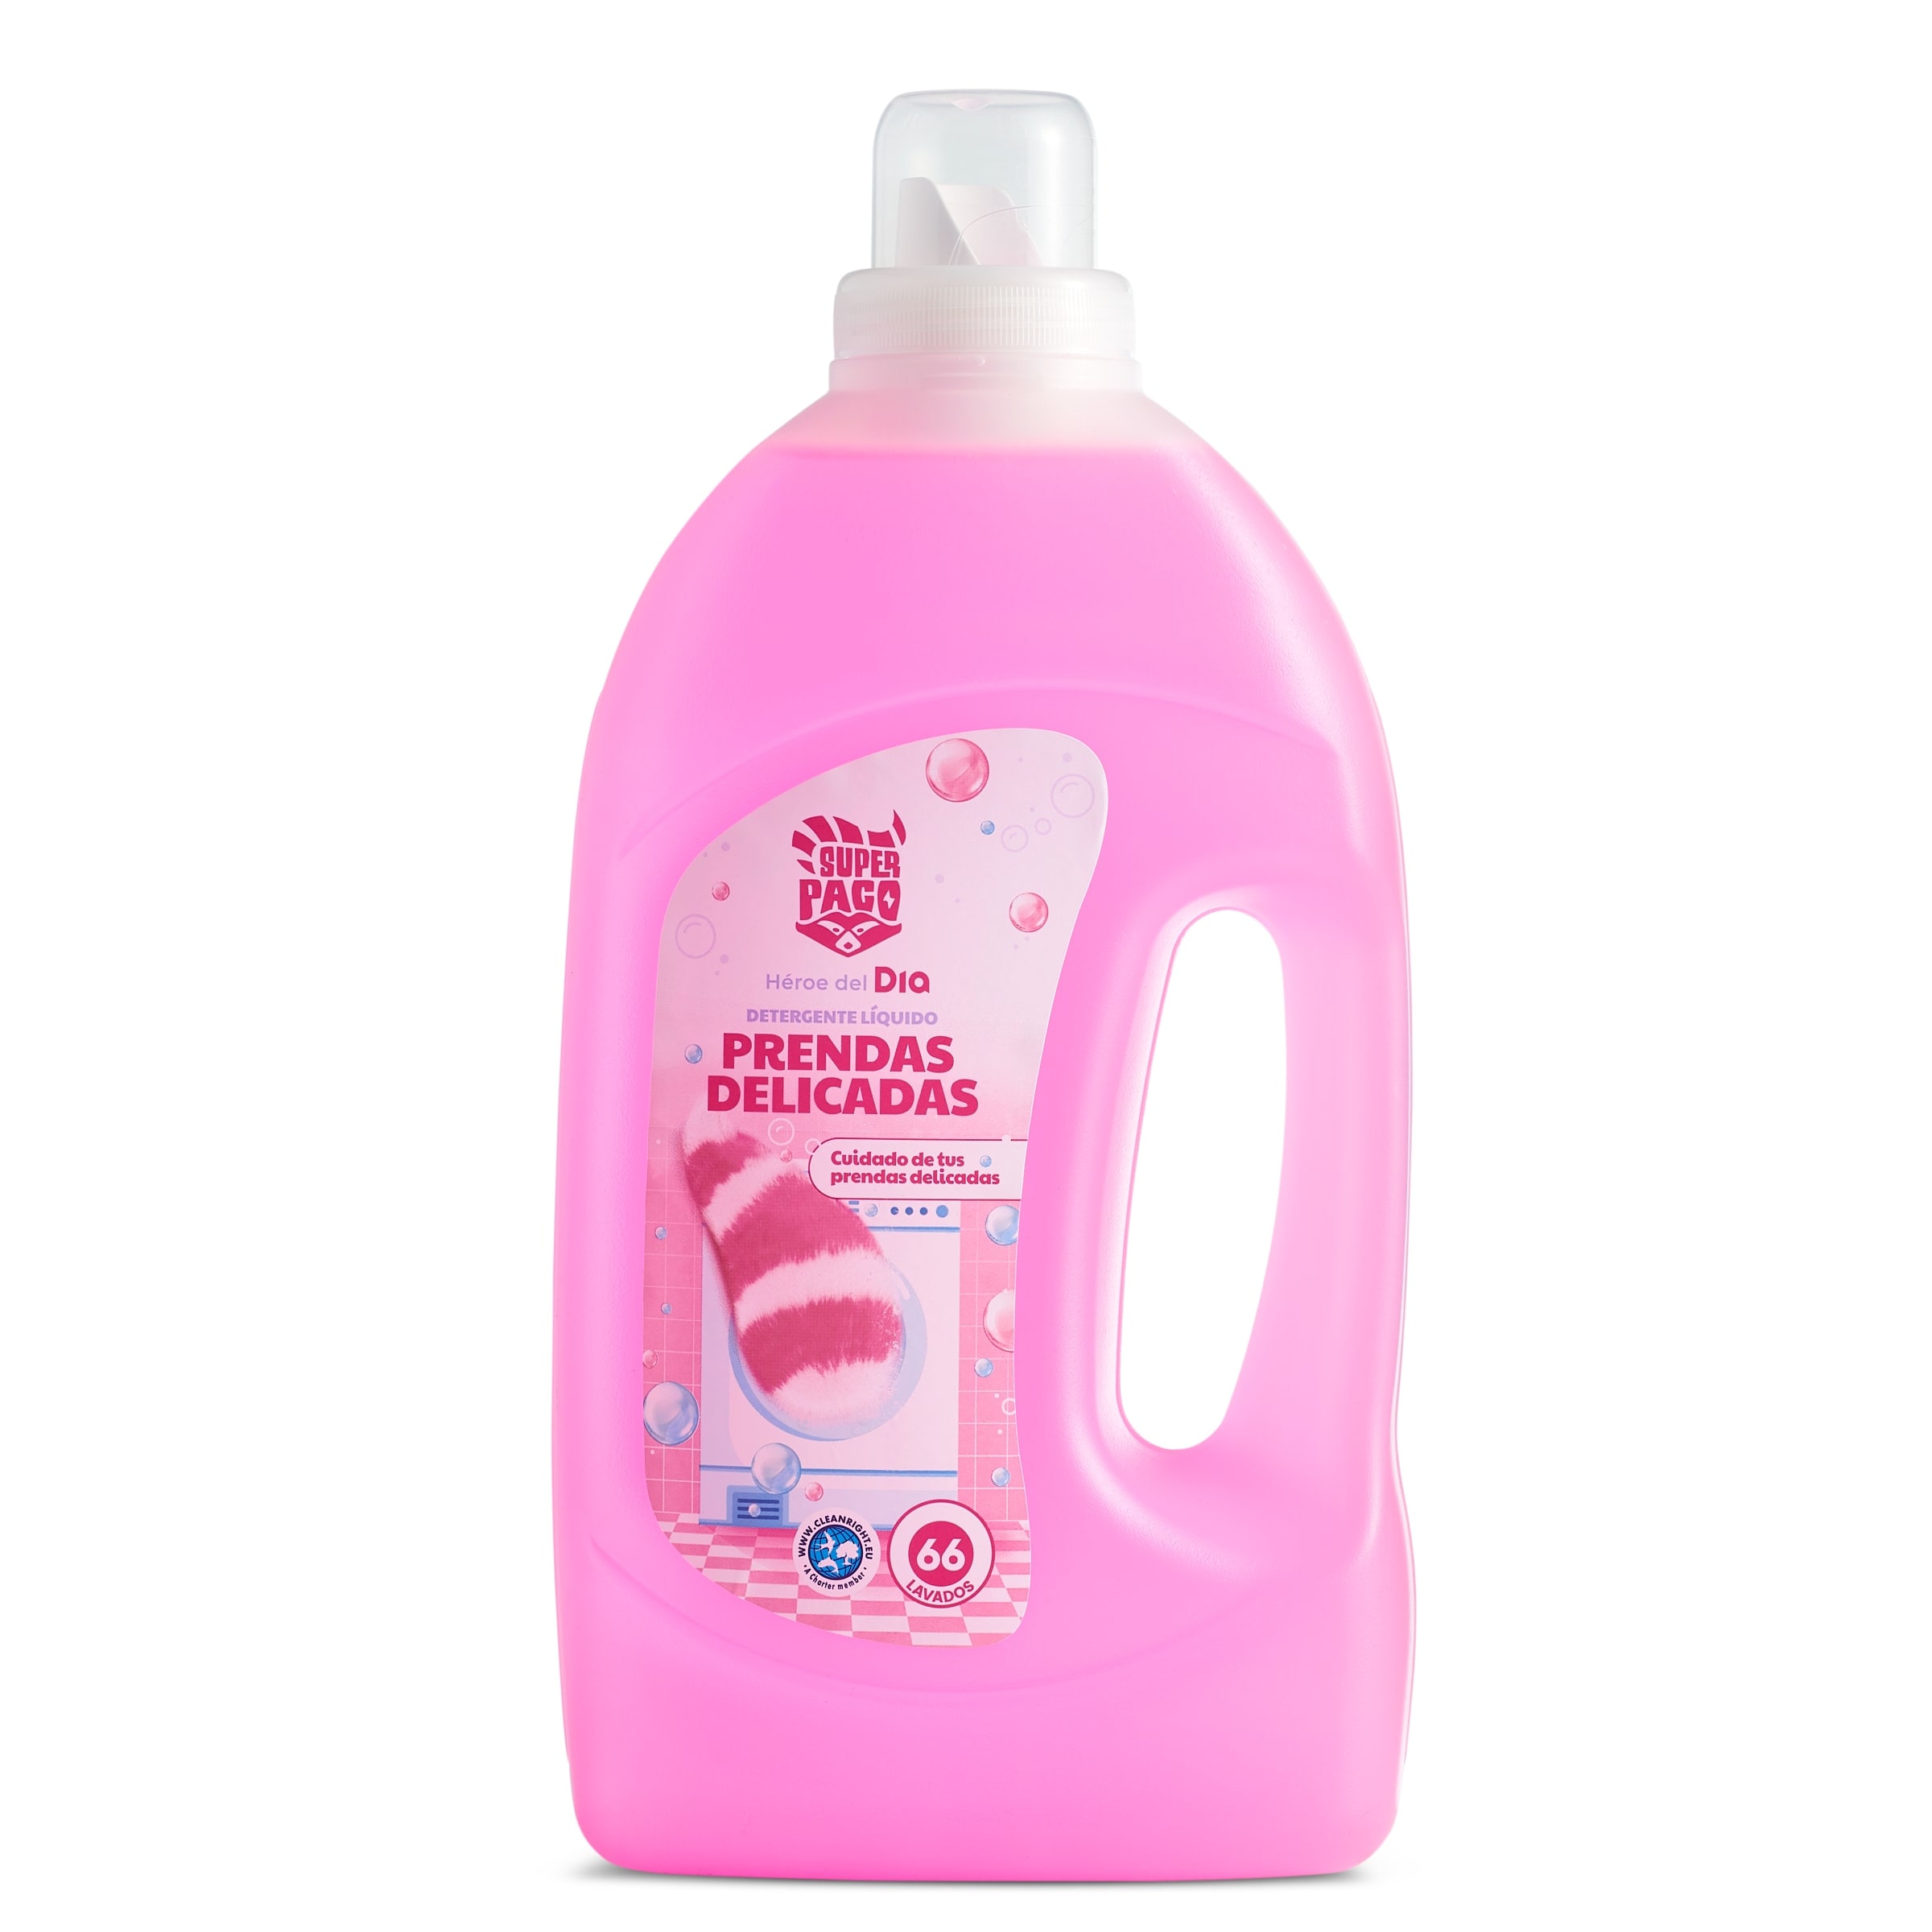 Cápsulas detergente Todo en 1 Ariel - 33 lavados - E.leclerc Pamplona